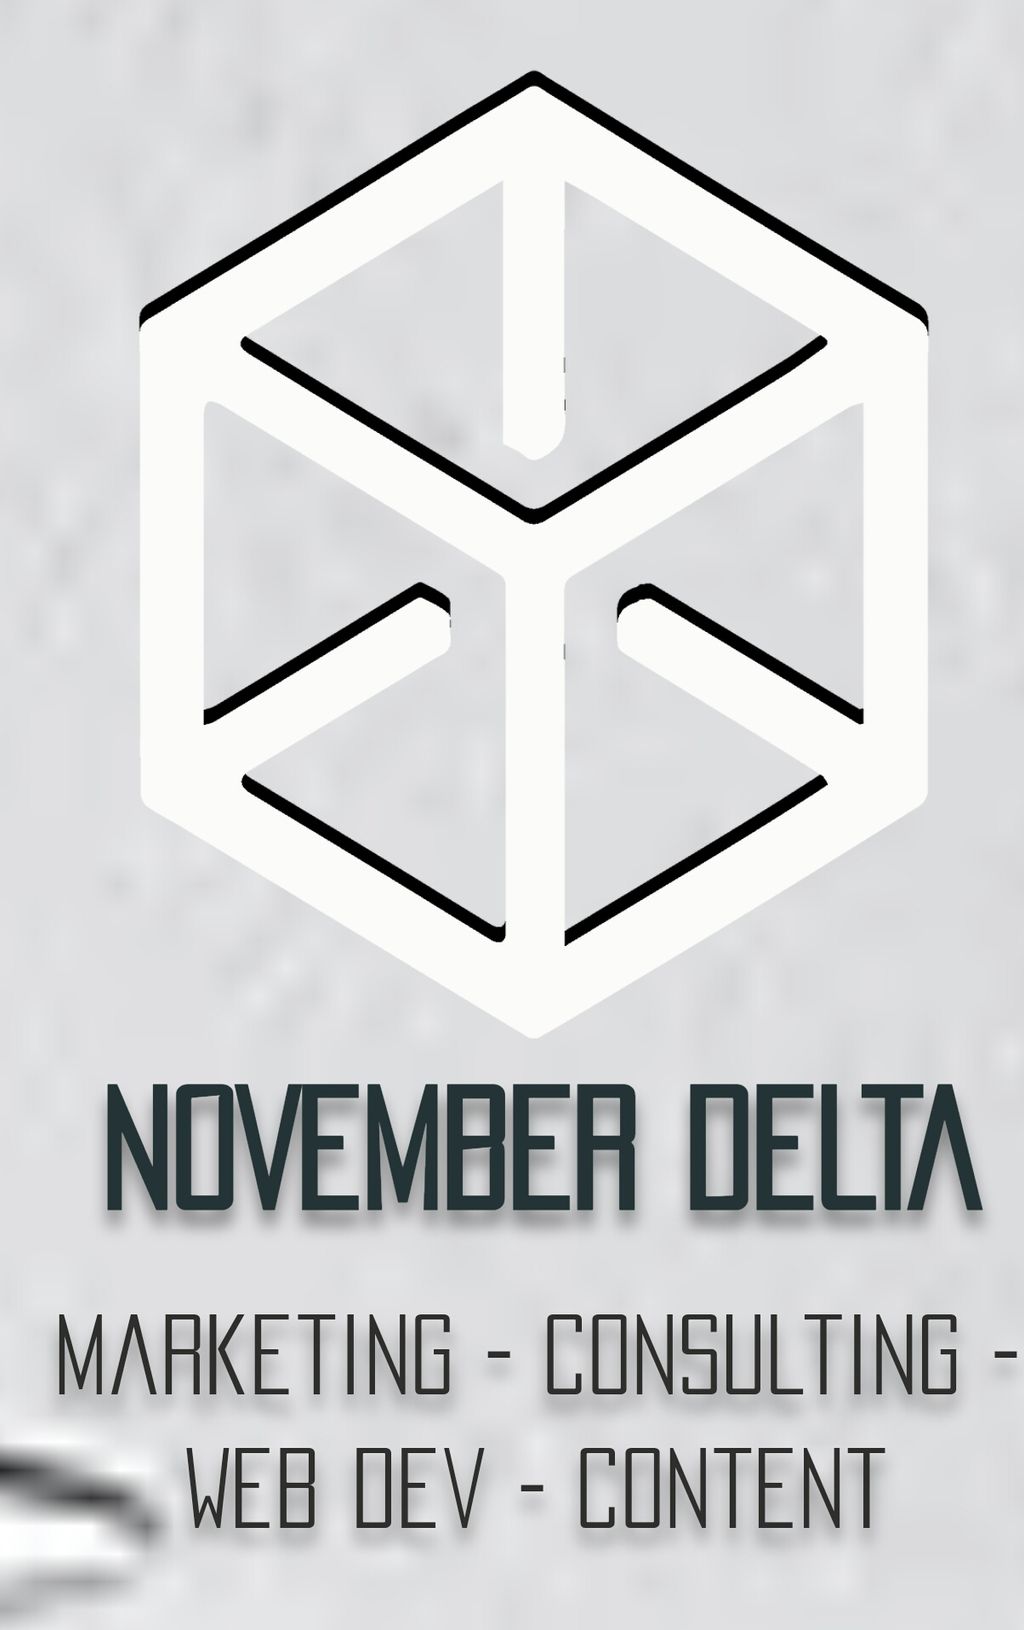 November Delta Marketing Agency